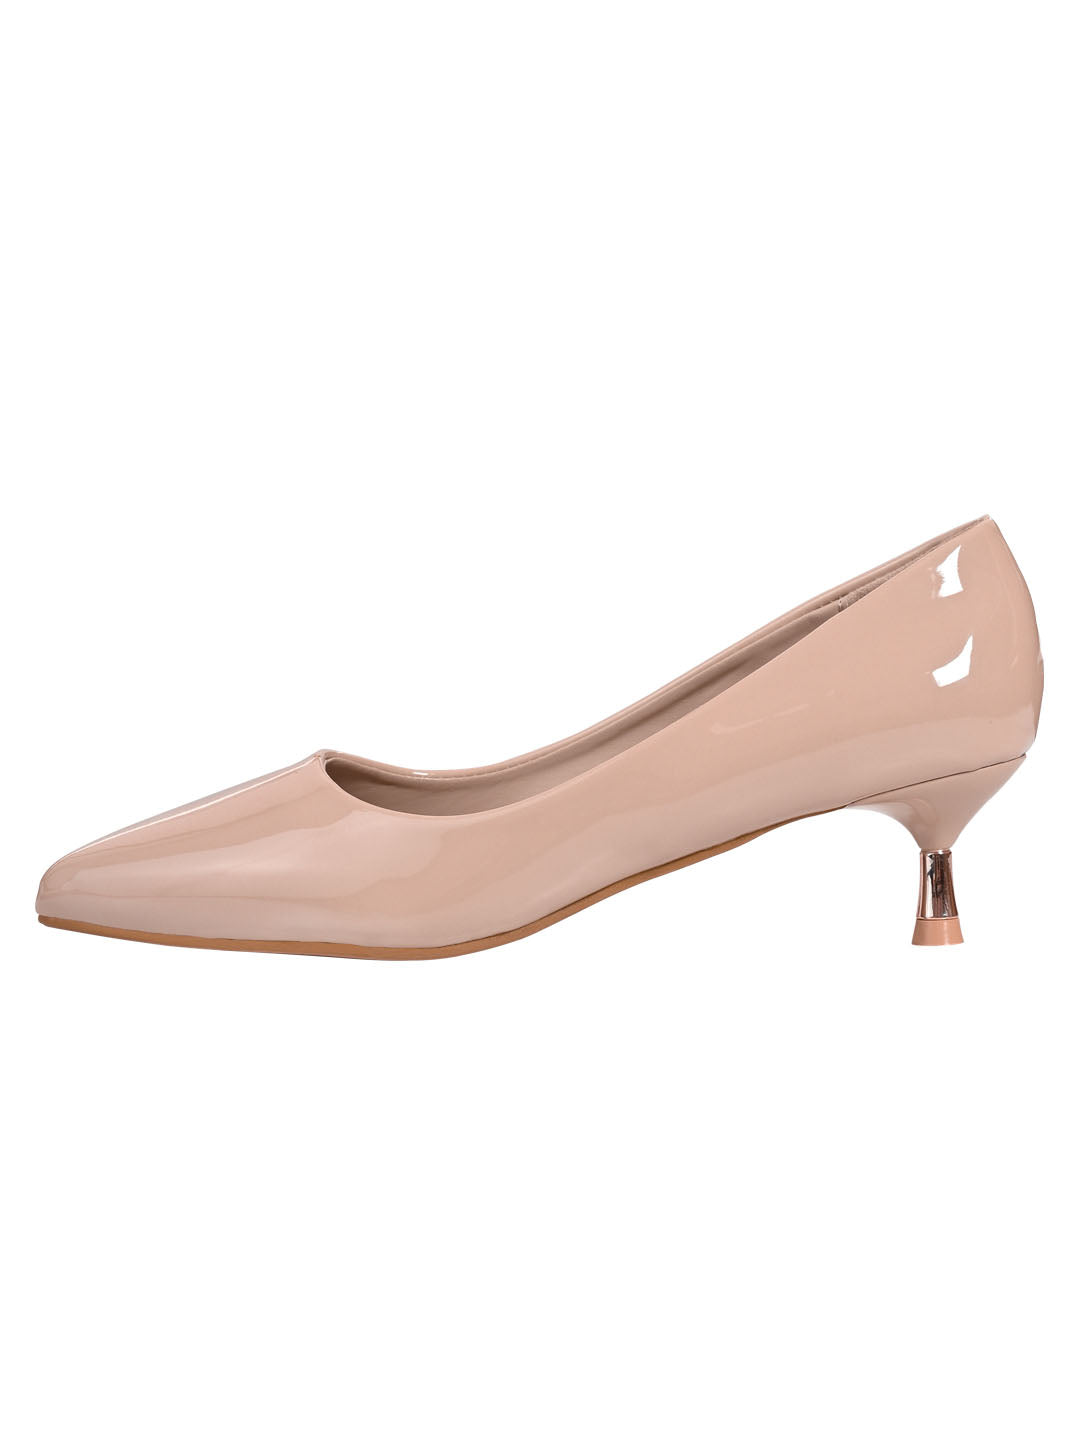 eczipvz Shoes for Women High Heels for Women Women's Pointed Toe High Heel  Pumps Slip On Elegant Stiletto Heel Dress Shoes,Gold - Walmart.com